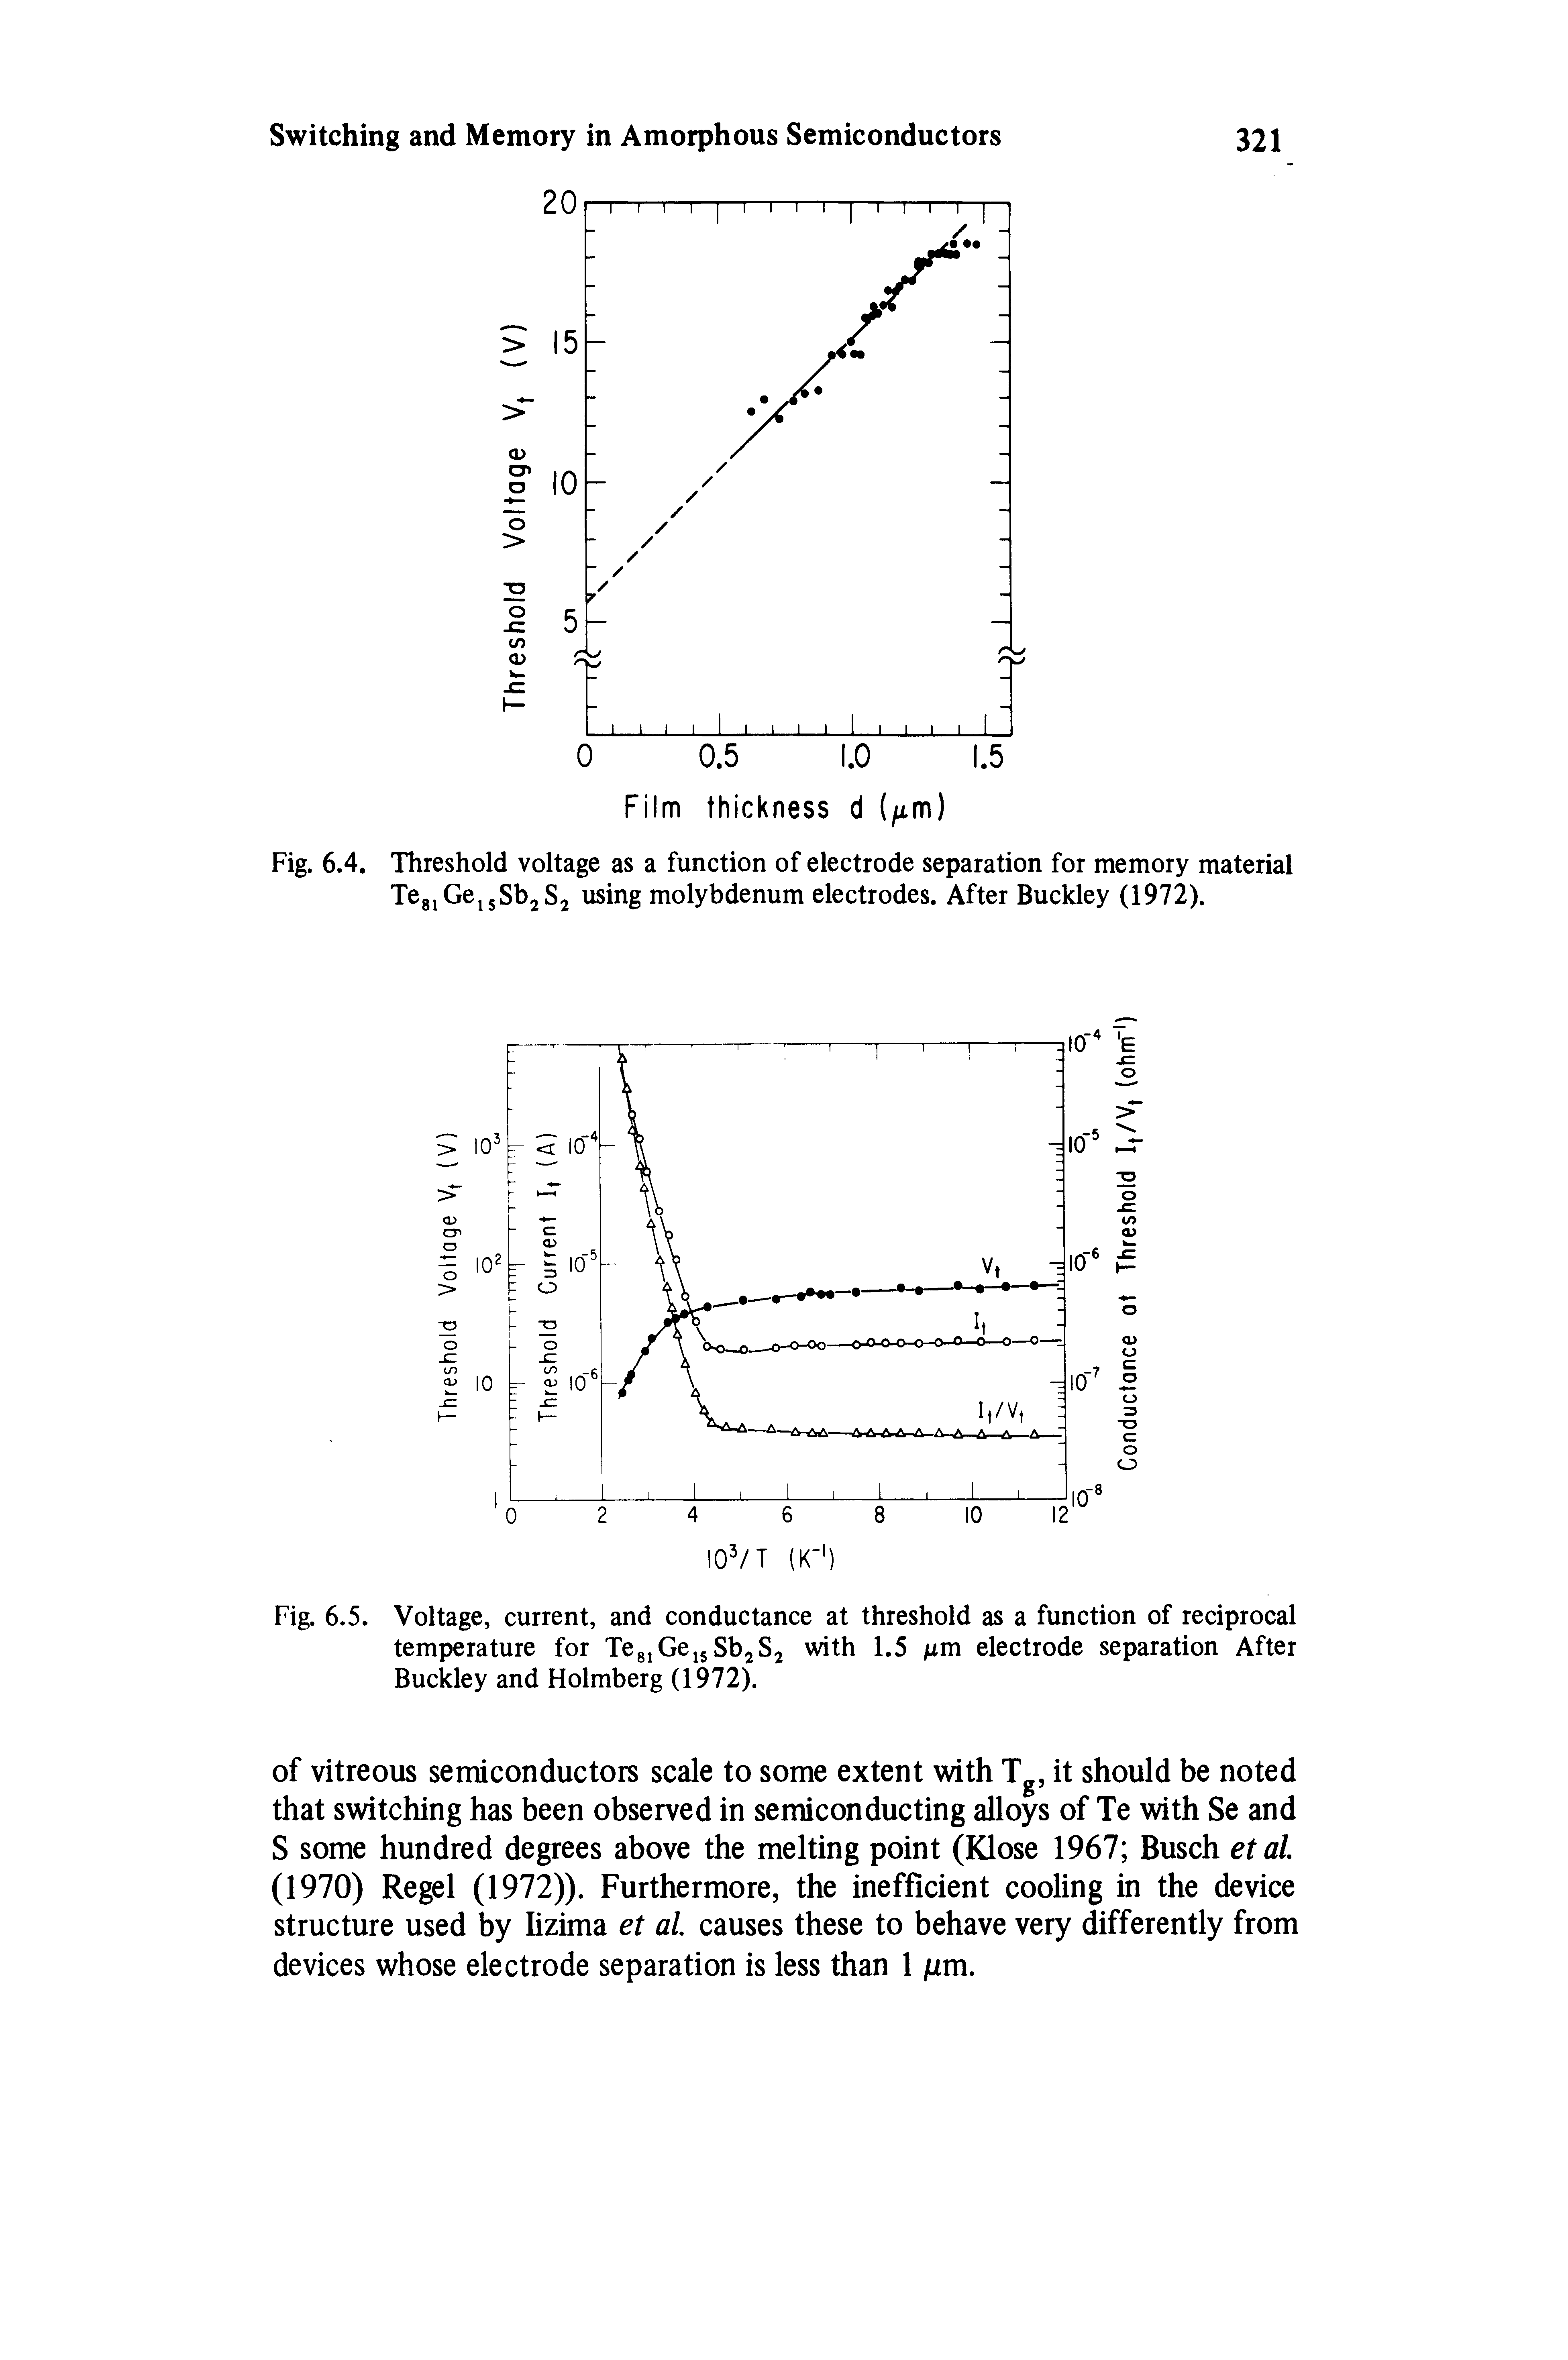 Fig. 6.4. Threshold voltage as a function of electrode separation for memory material TegiGejsSbjS using molybdenum electrodes. After Buckley (1972).